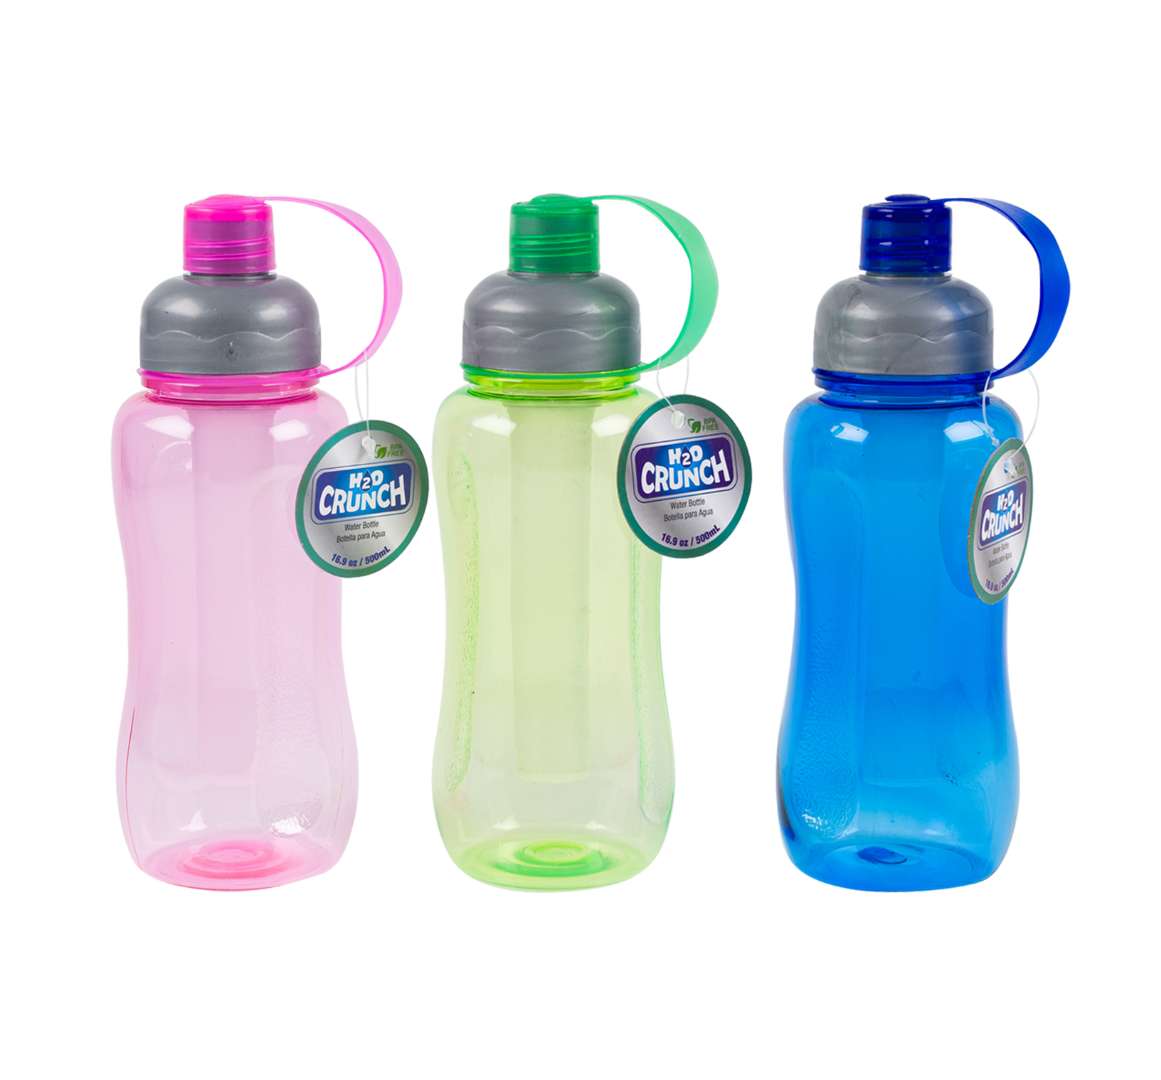 Wholesale Flip Top Plastic Water Bottles in 3 Colors - DollarDays